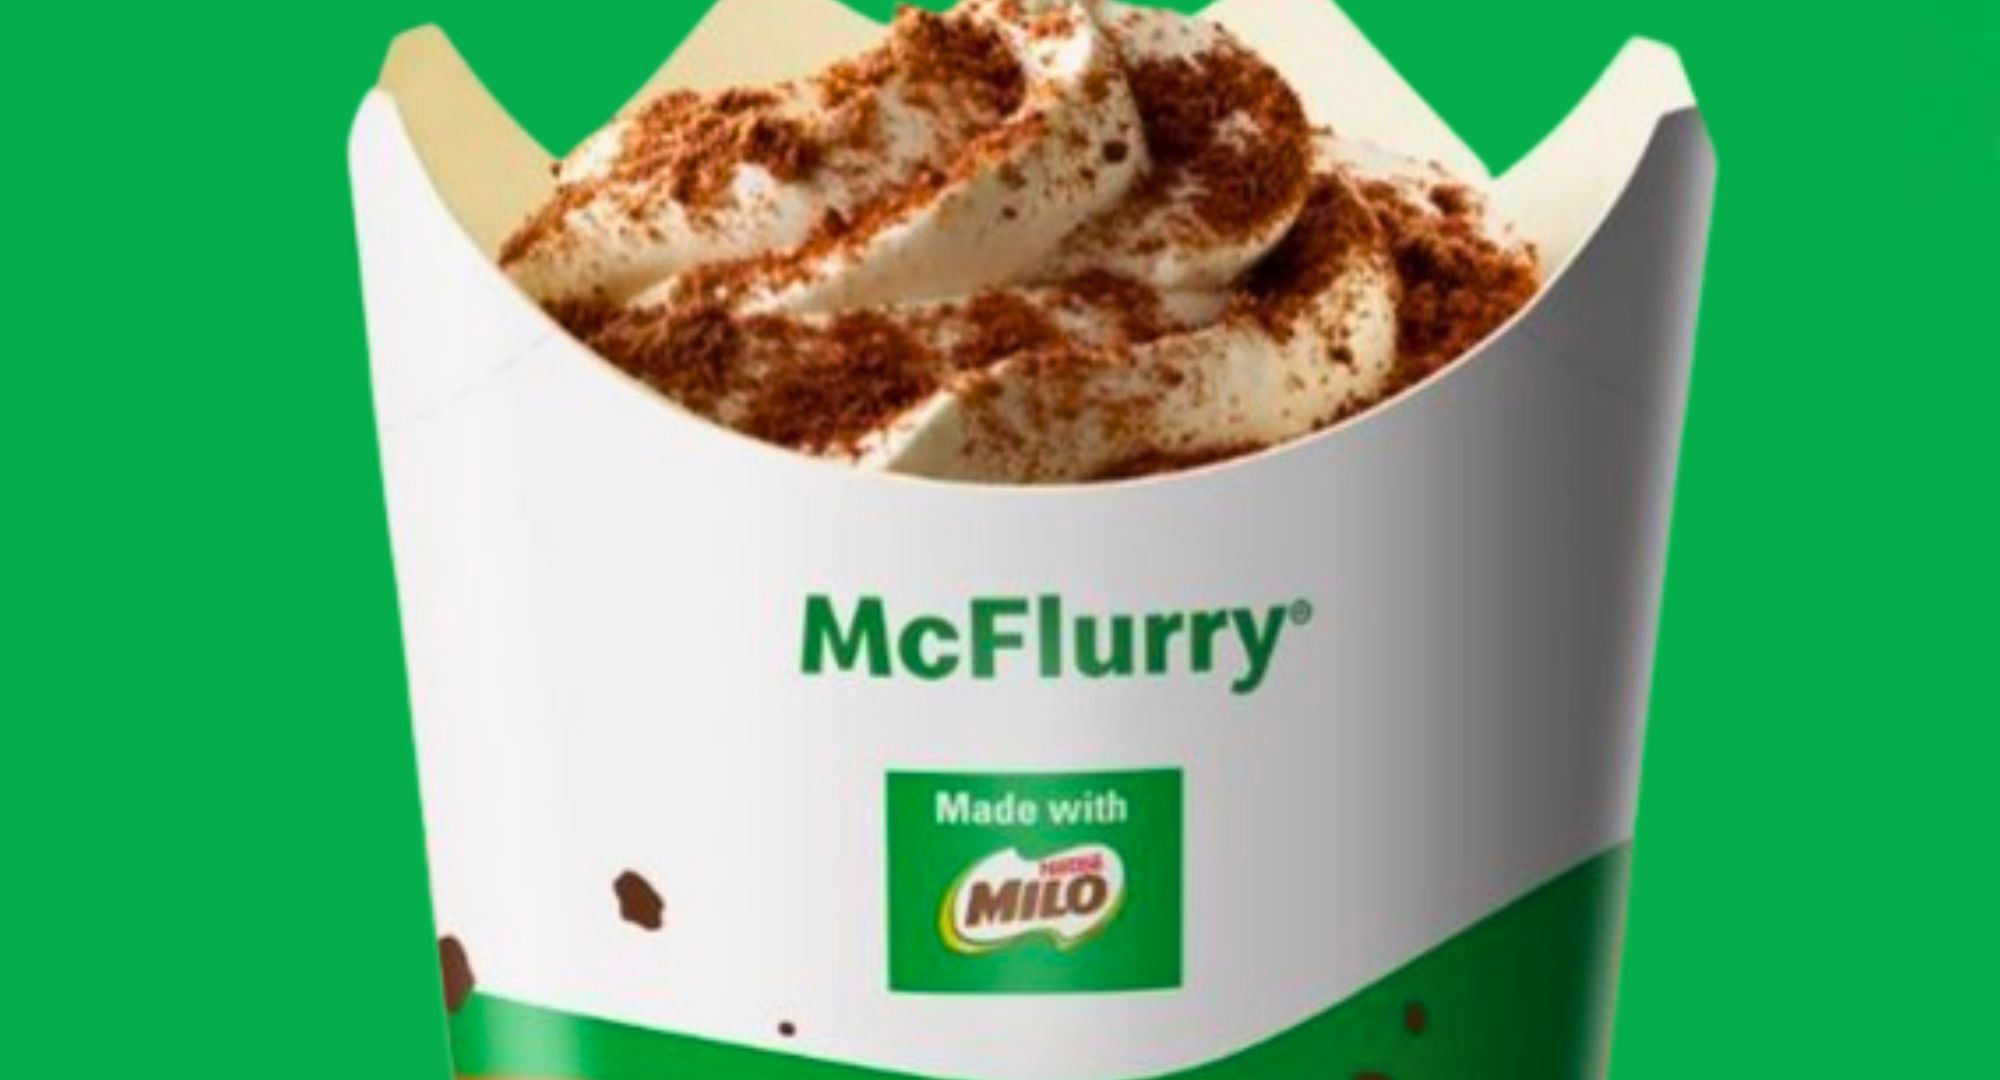 Maccas Milo McFlurry is melting away!